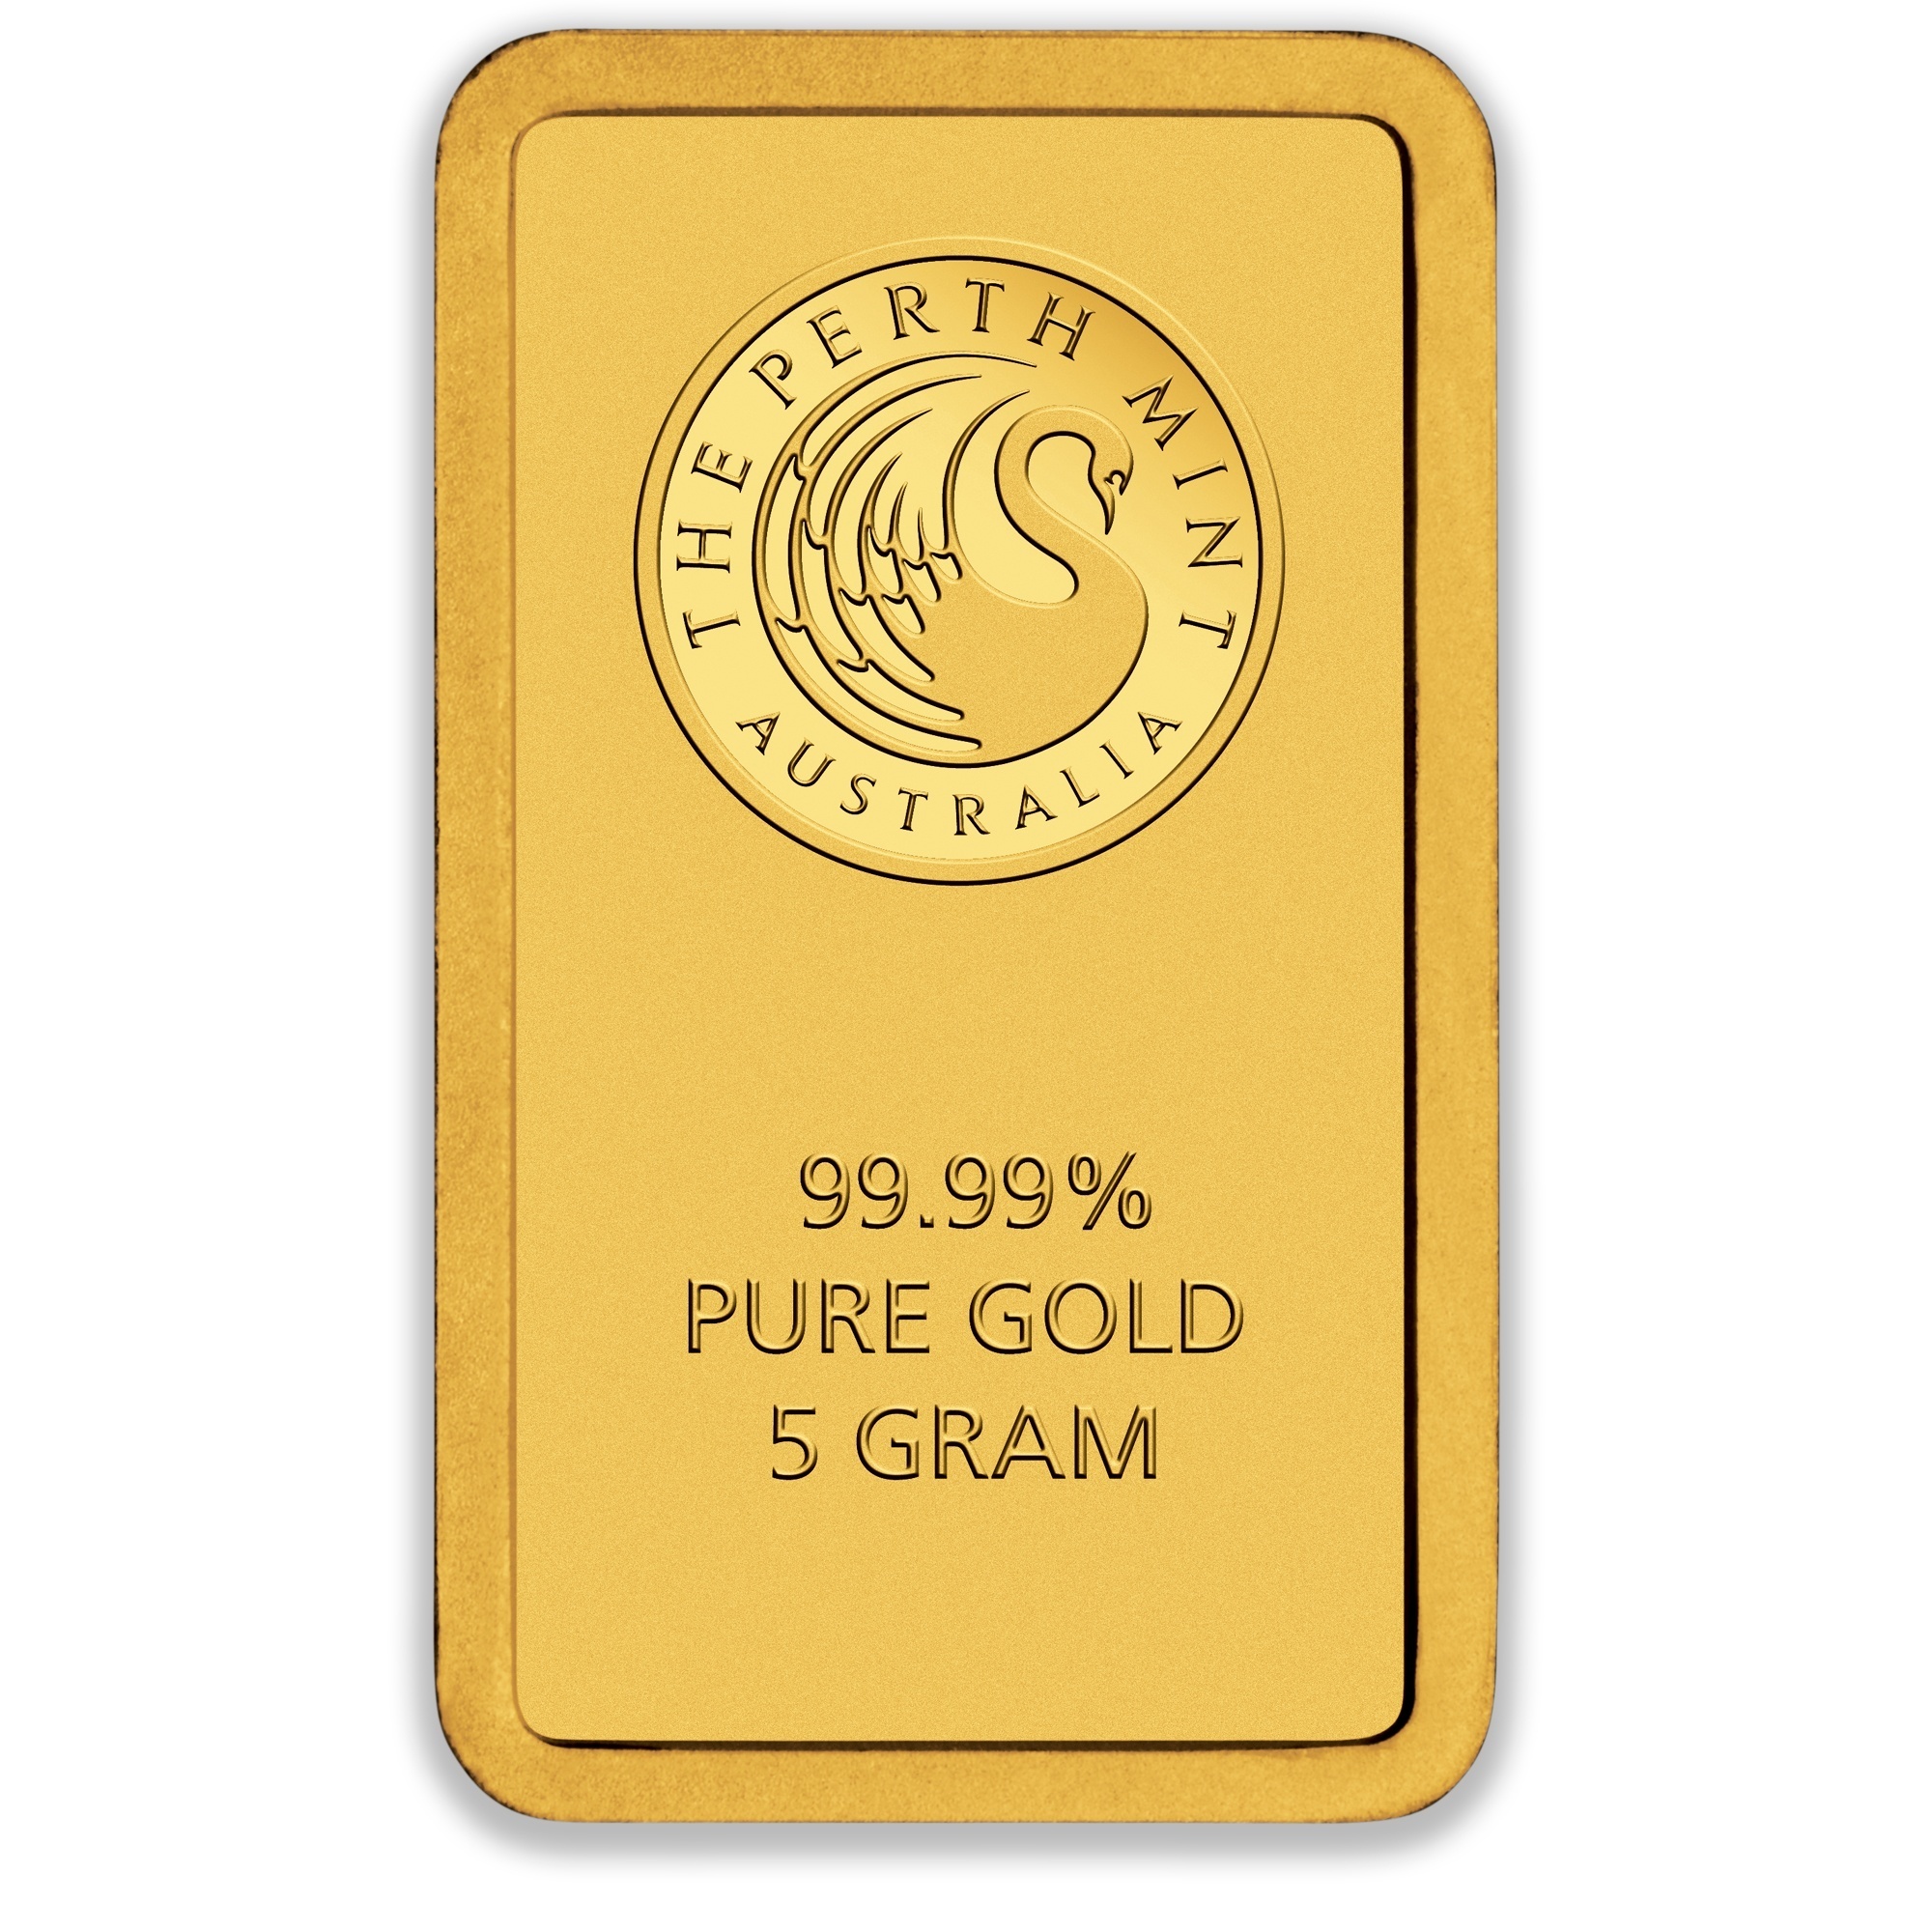 5g Perth Mint Gold Minted Bar